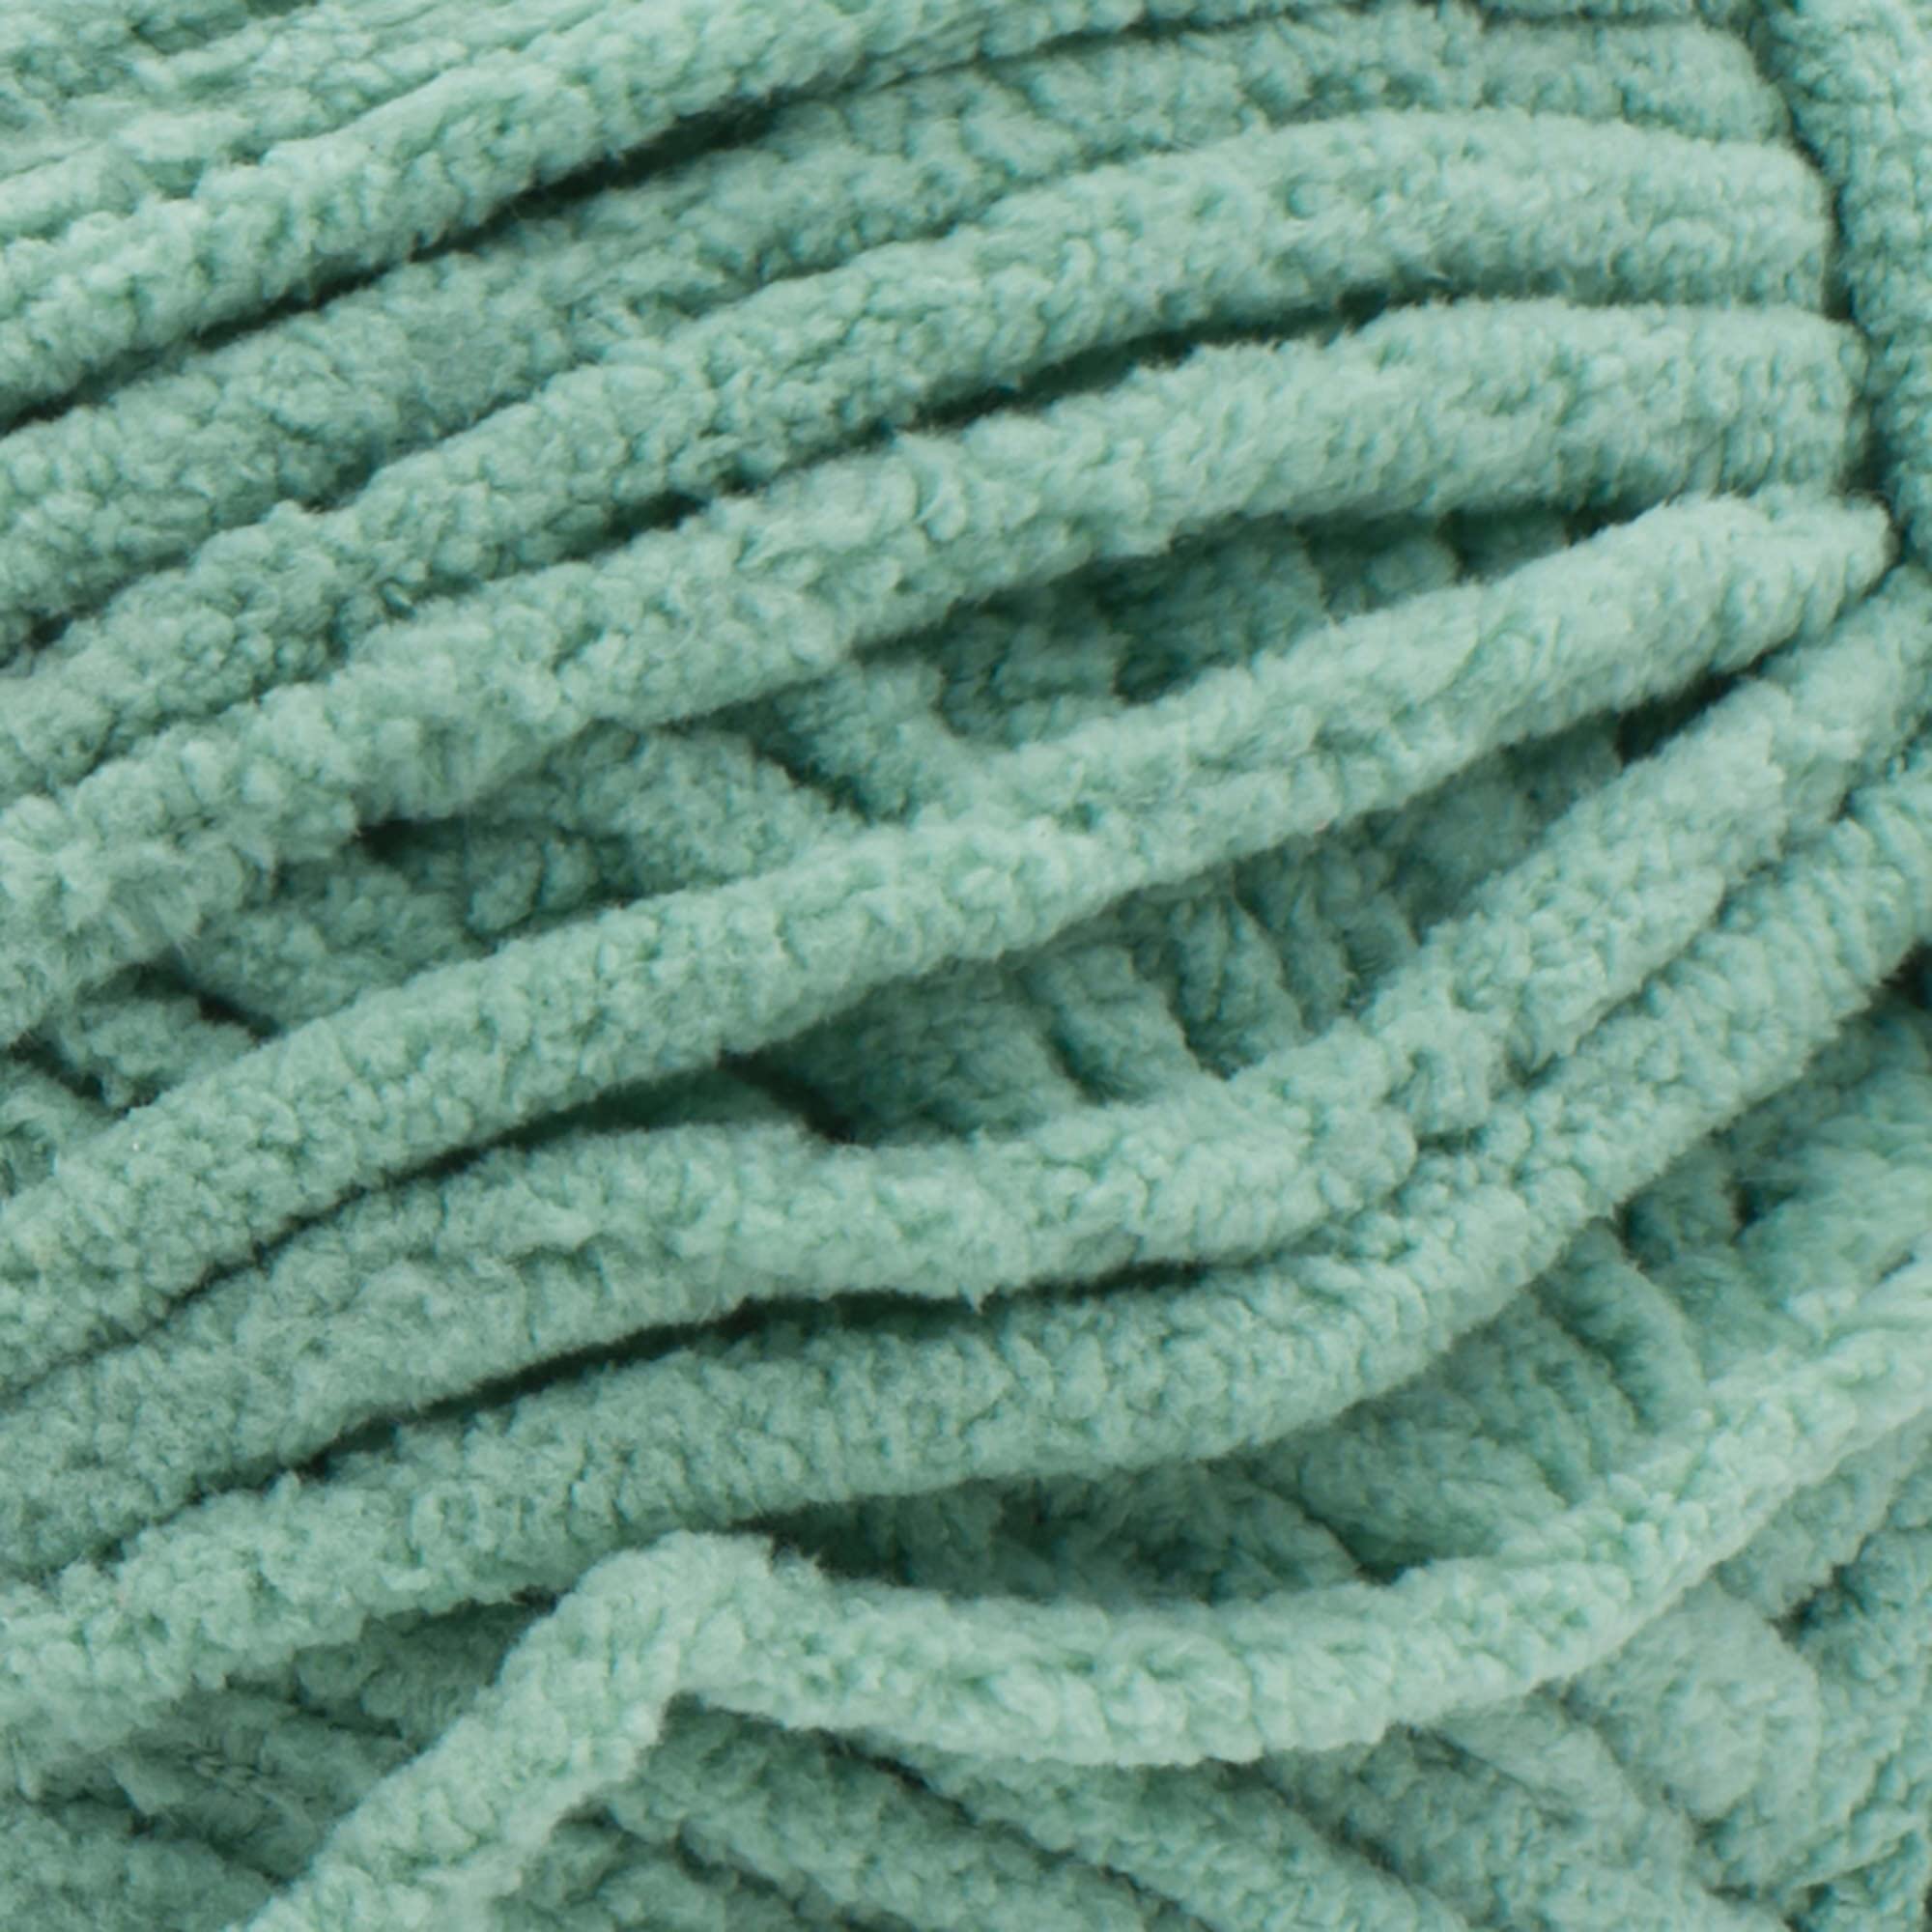 Bernat Baby Blanket BB Misty Jungle Green Yarn - 1 Pack of 10.5oz/300g - Polyester - #6 Super Bulky - 220 Yards - Knitting, Crocheting, Crafts & Amigurumi